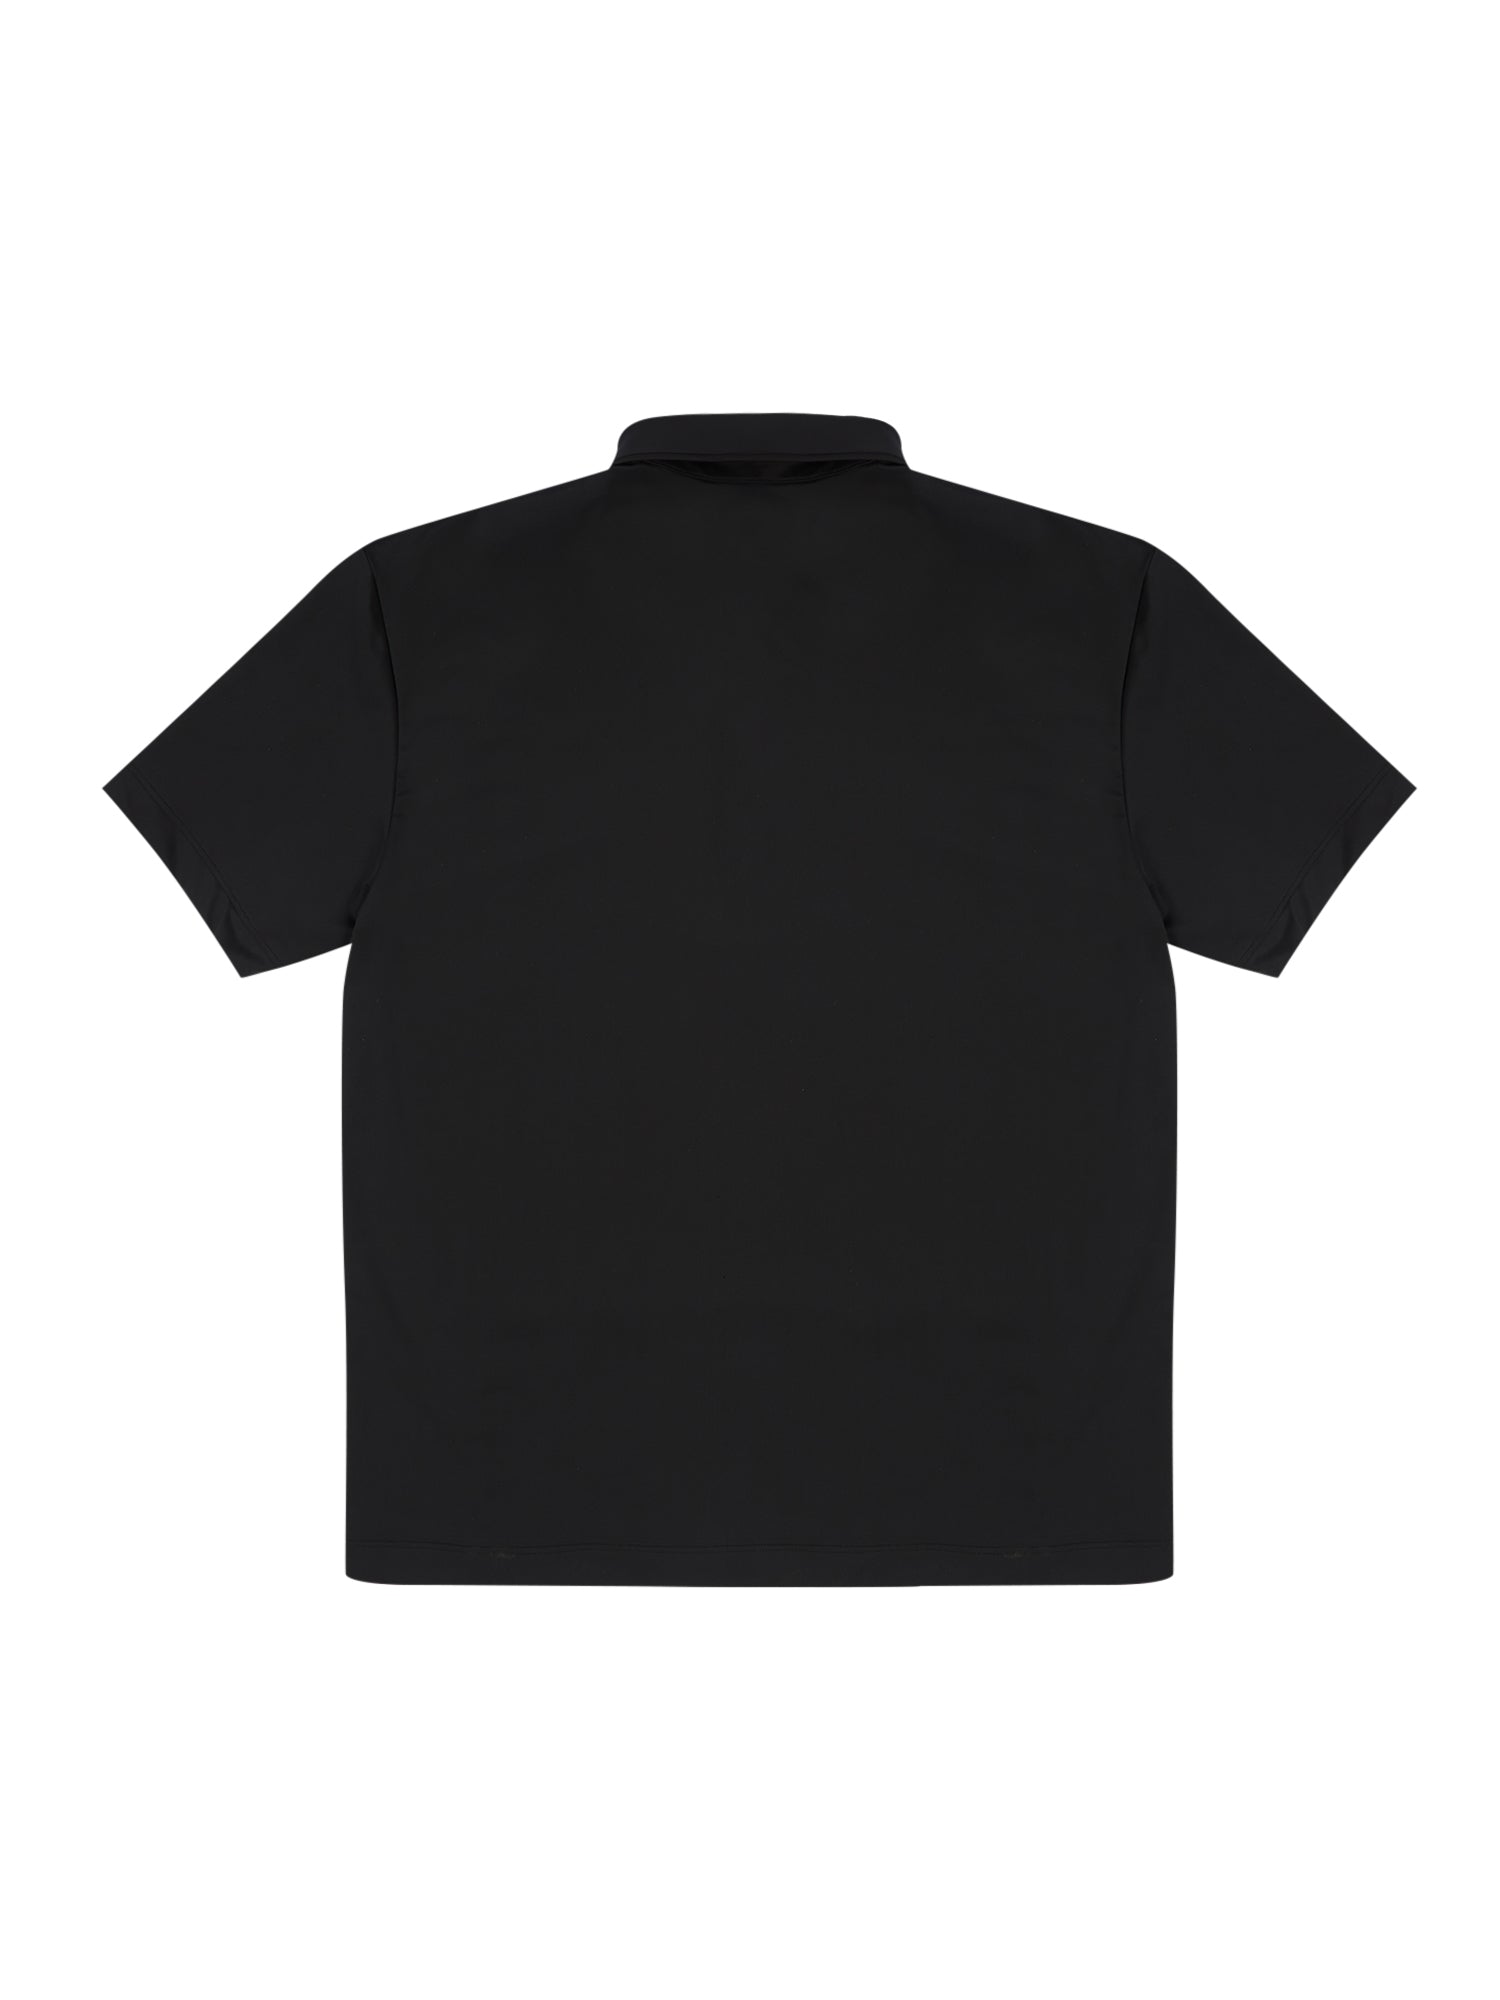 Black round neck econly polo t-shirt